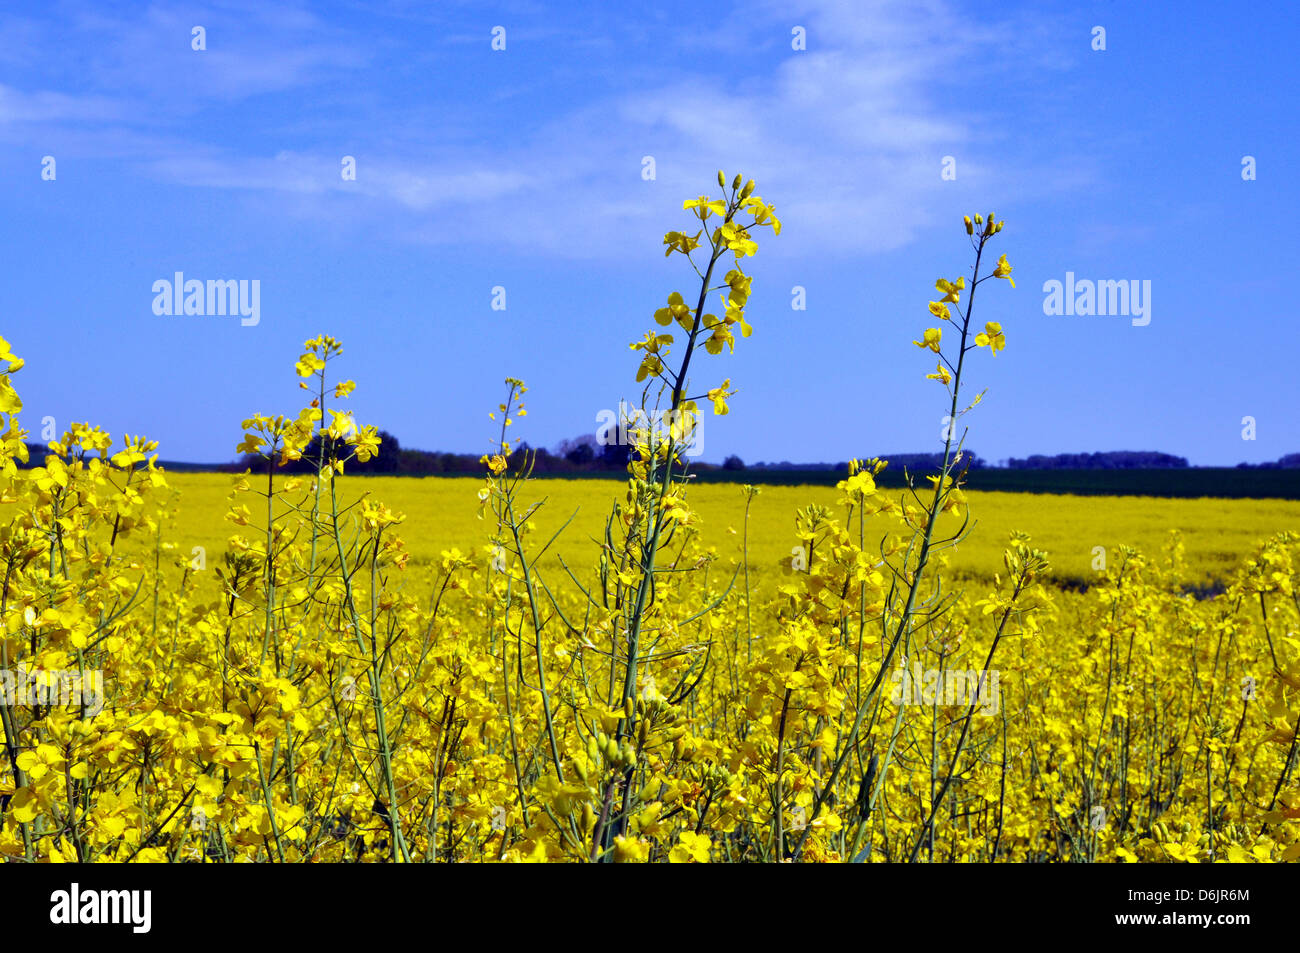 Gelbes Feld gegen einen blauen Himmel, Rapsöl Ernte, Île-de-France-Region in Nord-Zentral-Frankreich. Stockfoto